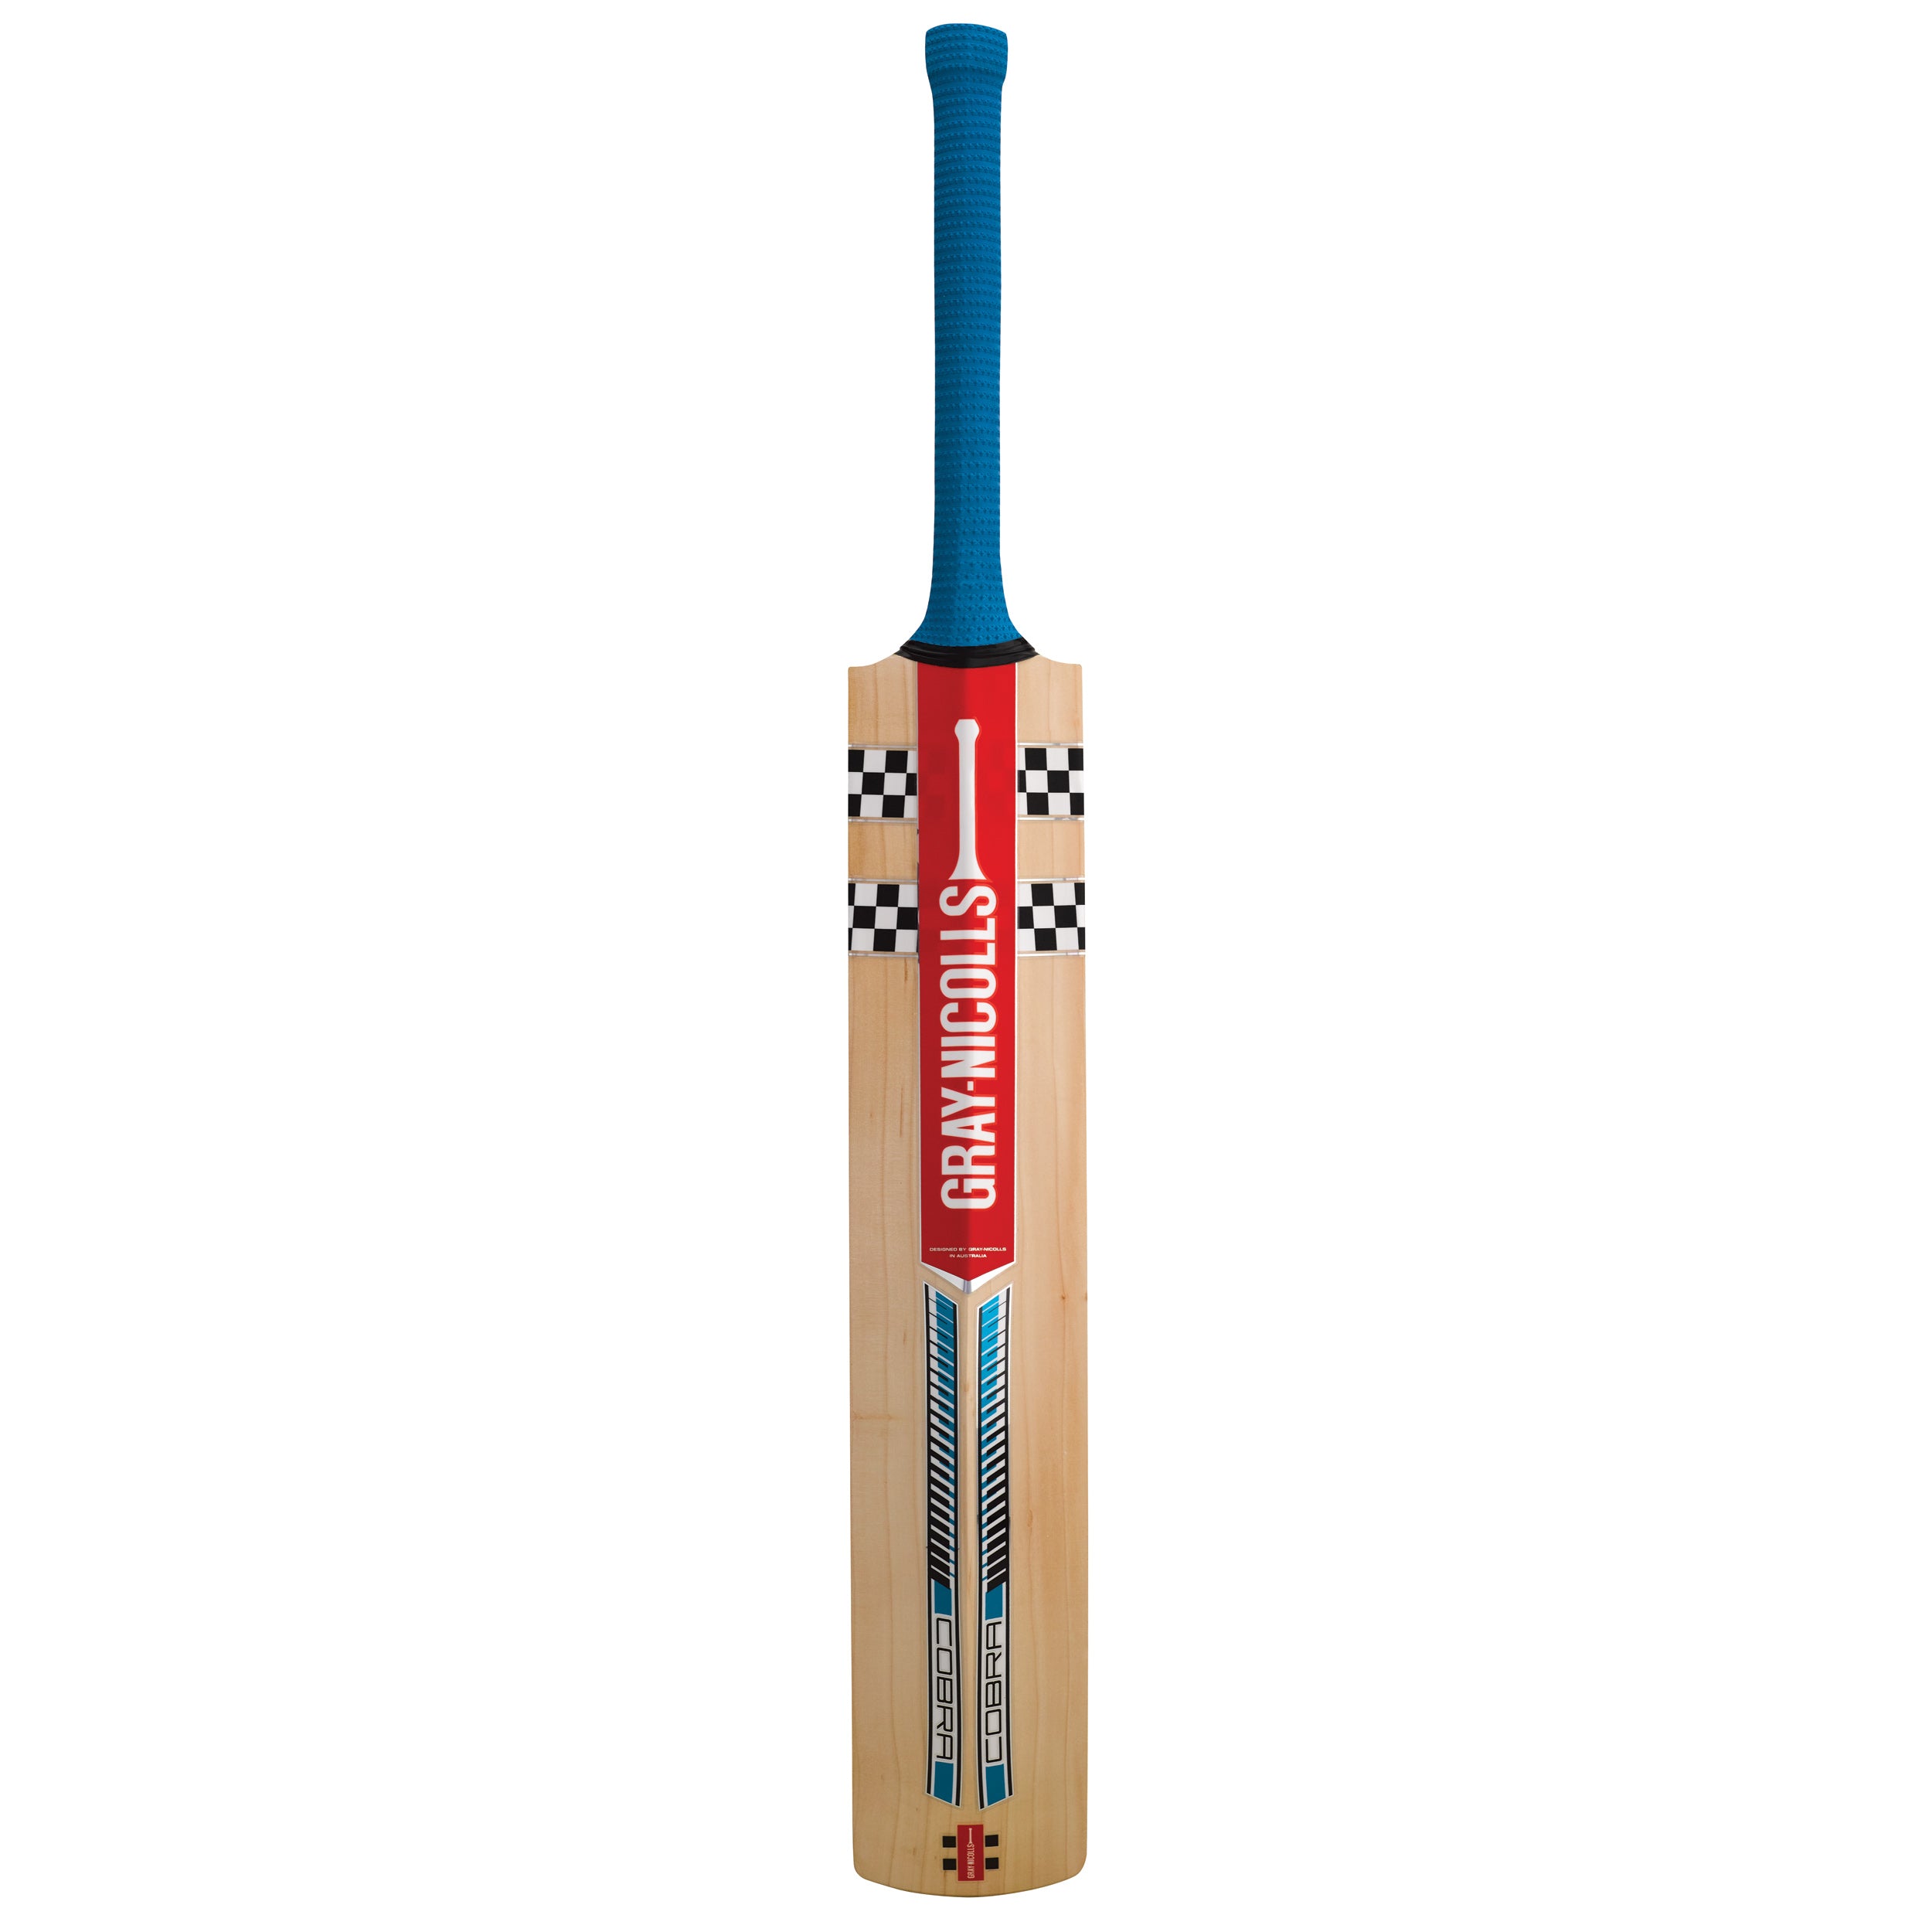 Gray-Nicolls Cobra 1250 Play Now English Willow Senior Cricket Bat